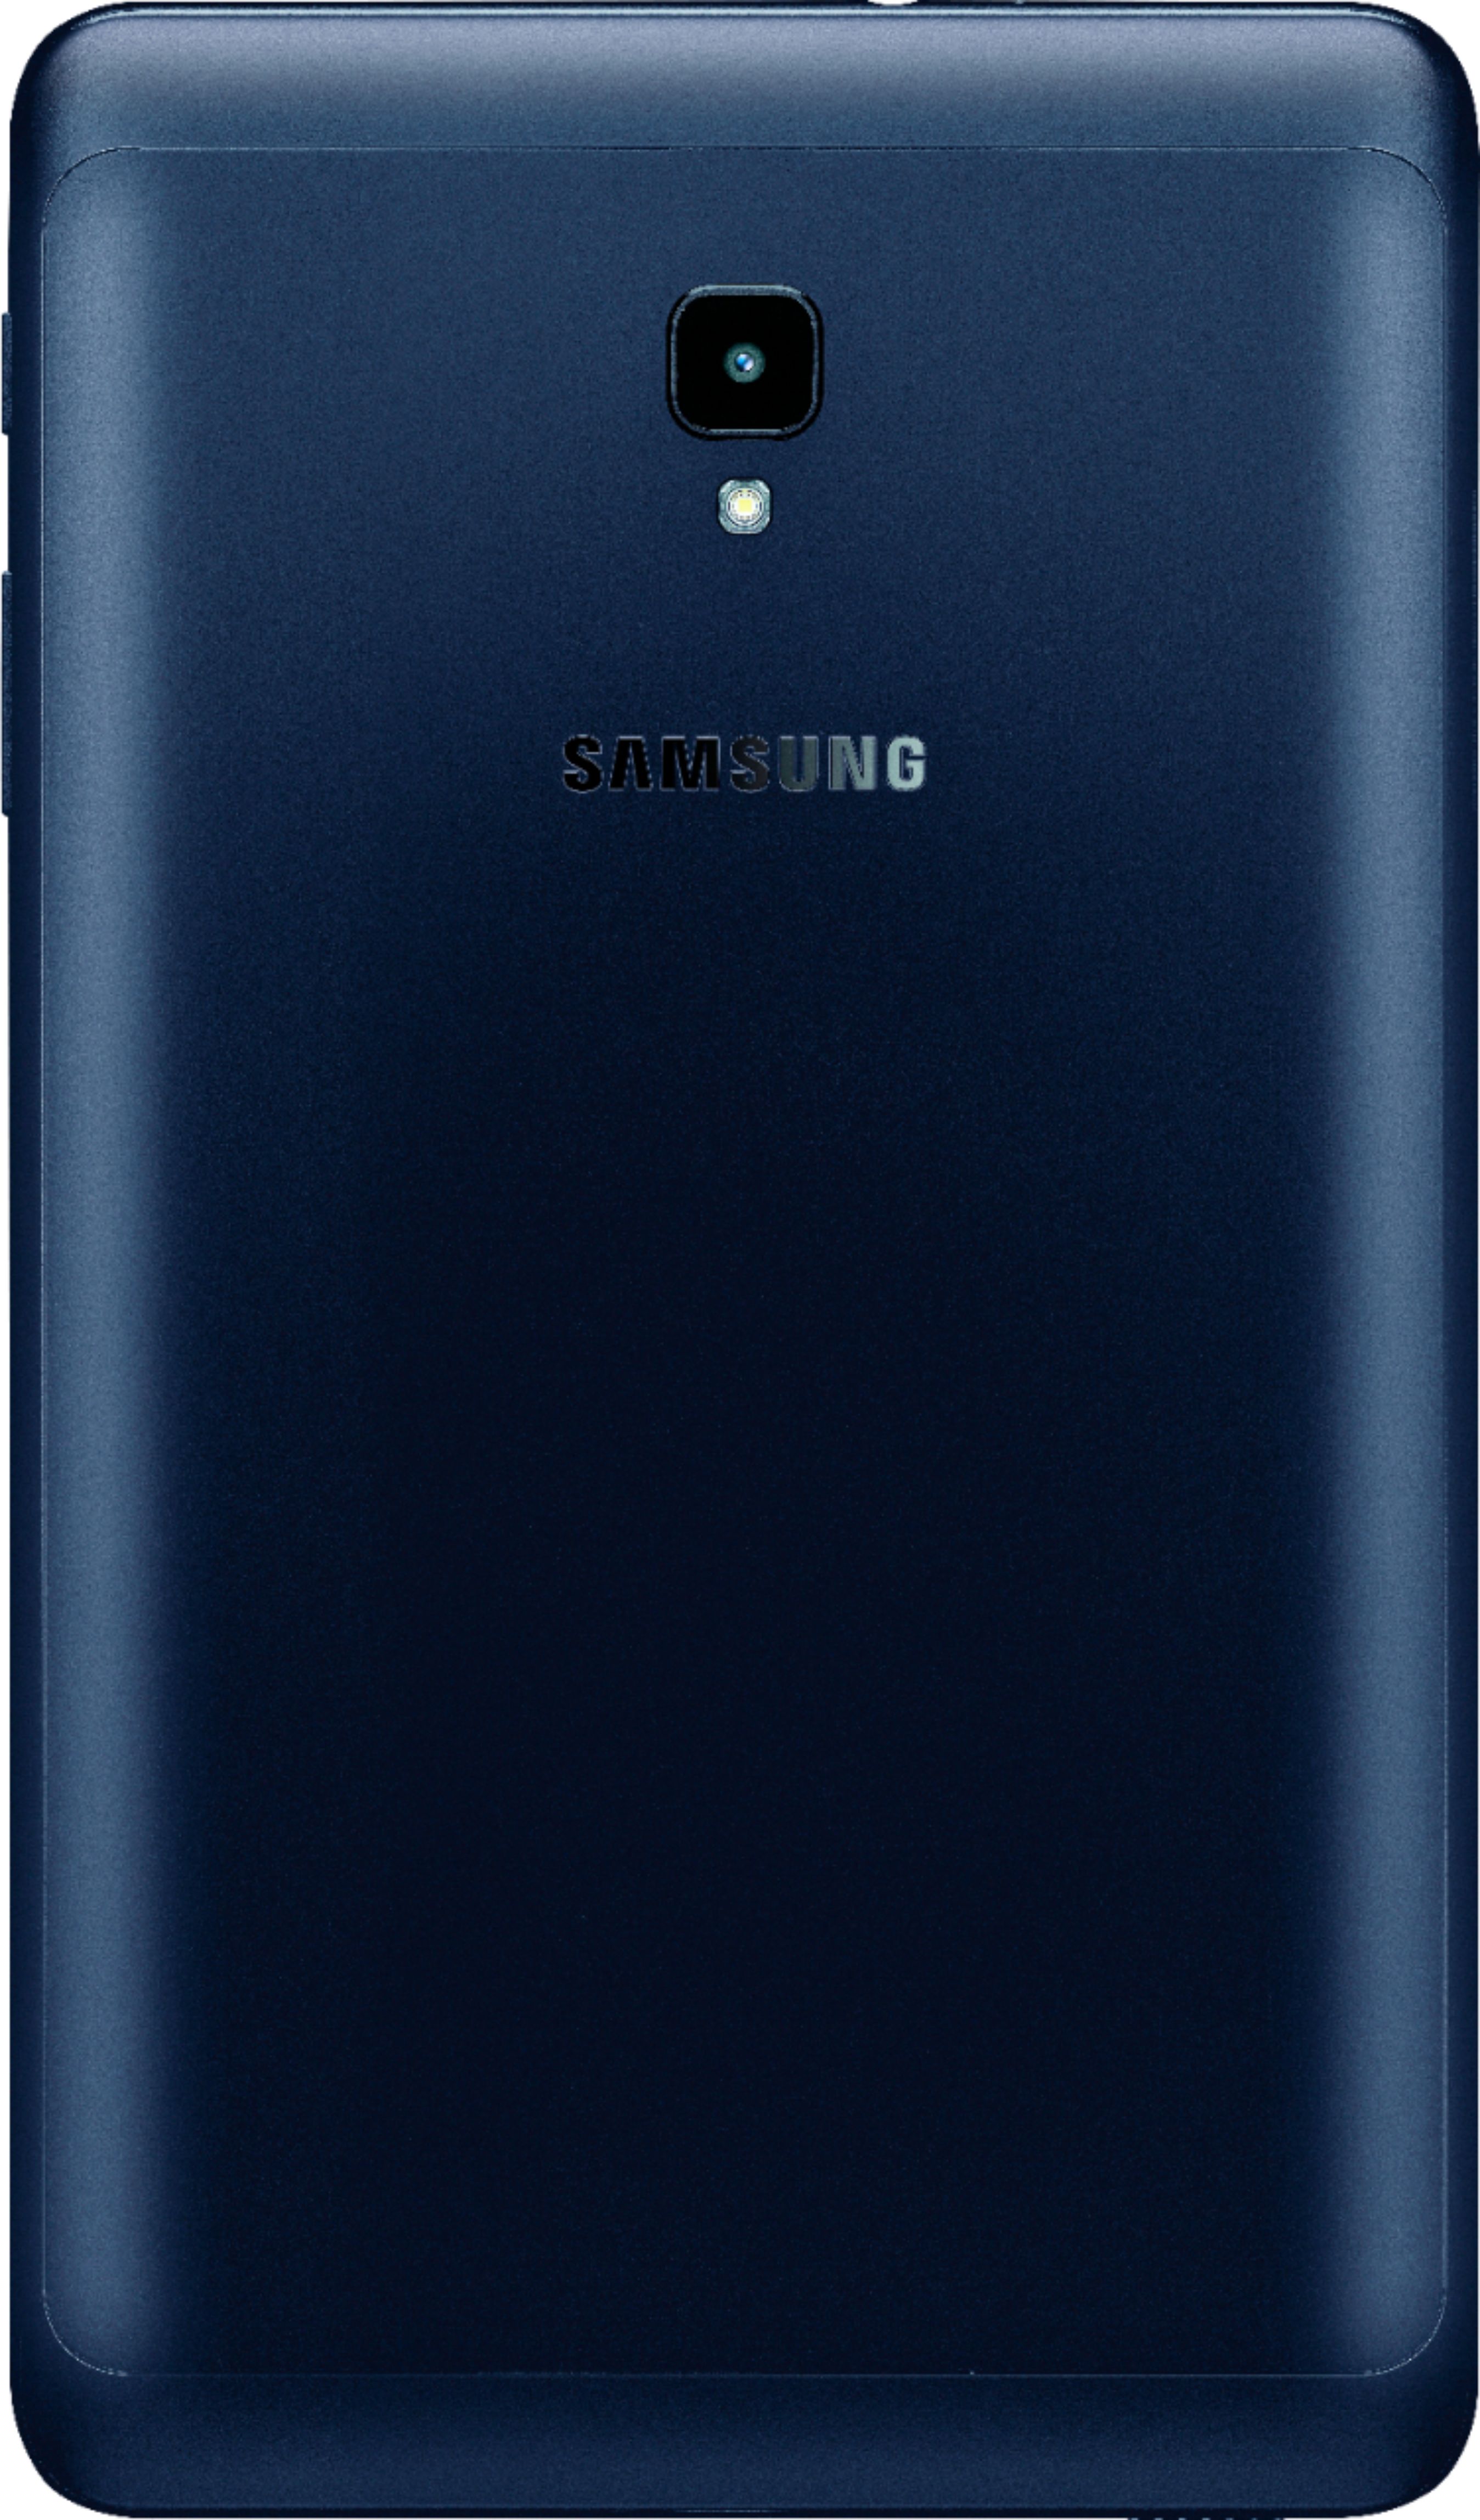 Samsung Galaxy Tab A 8.0 SM-T387V 32 Go Noir (Verizon Unlocked) remis à  neuf Noir